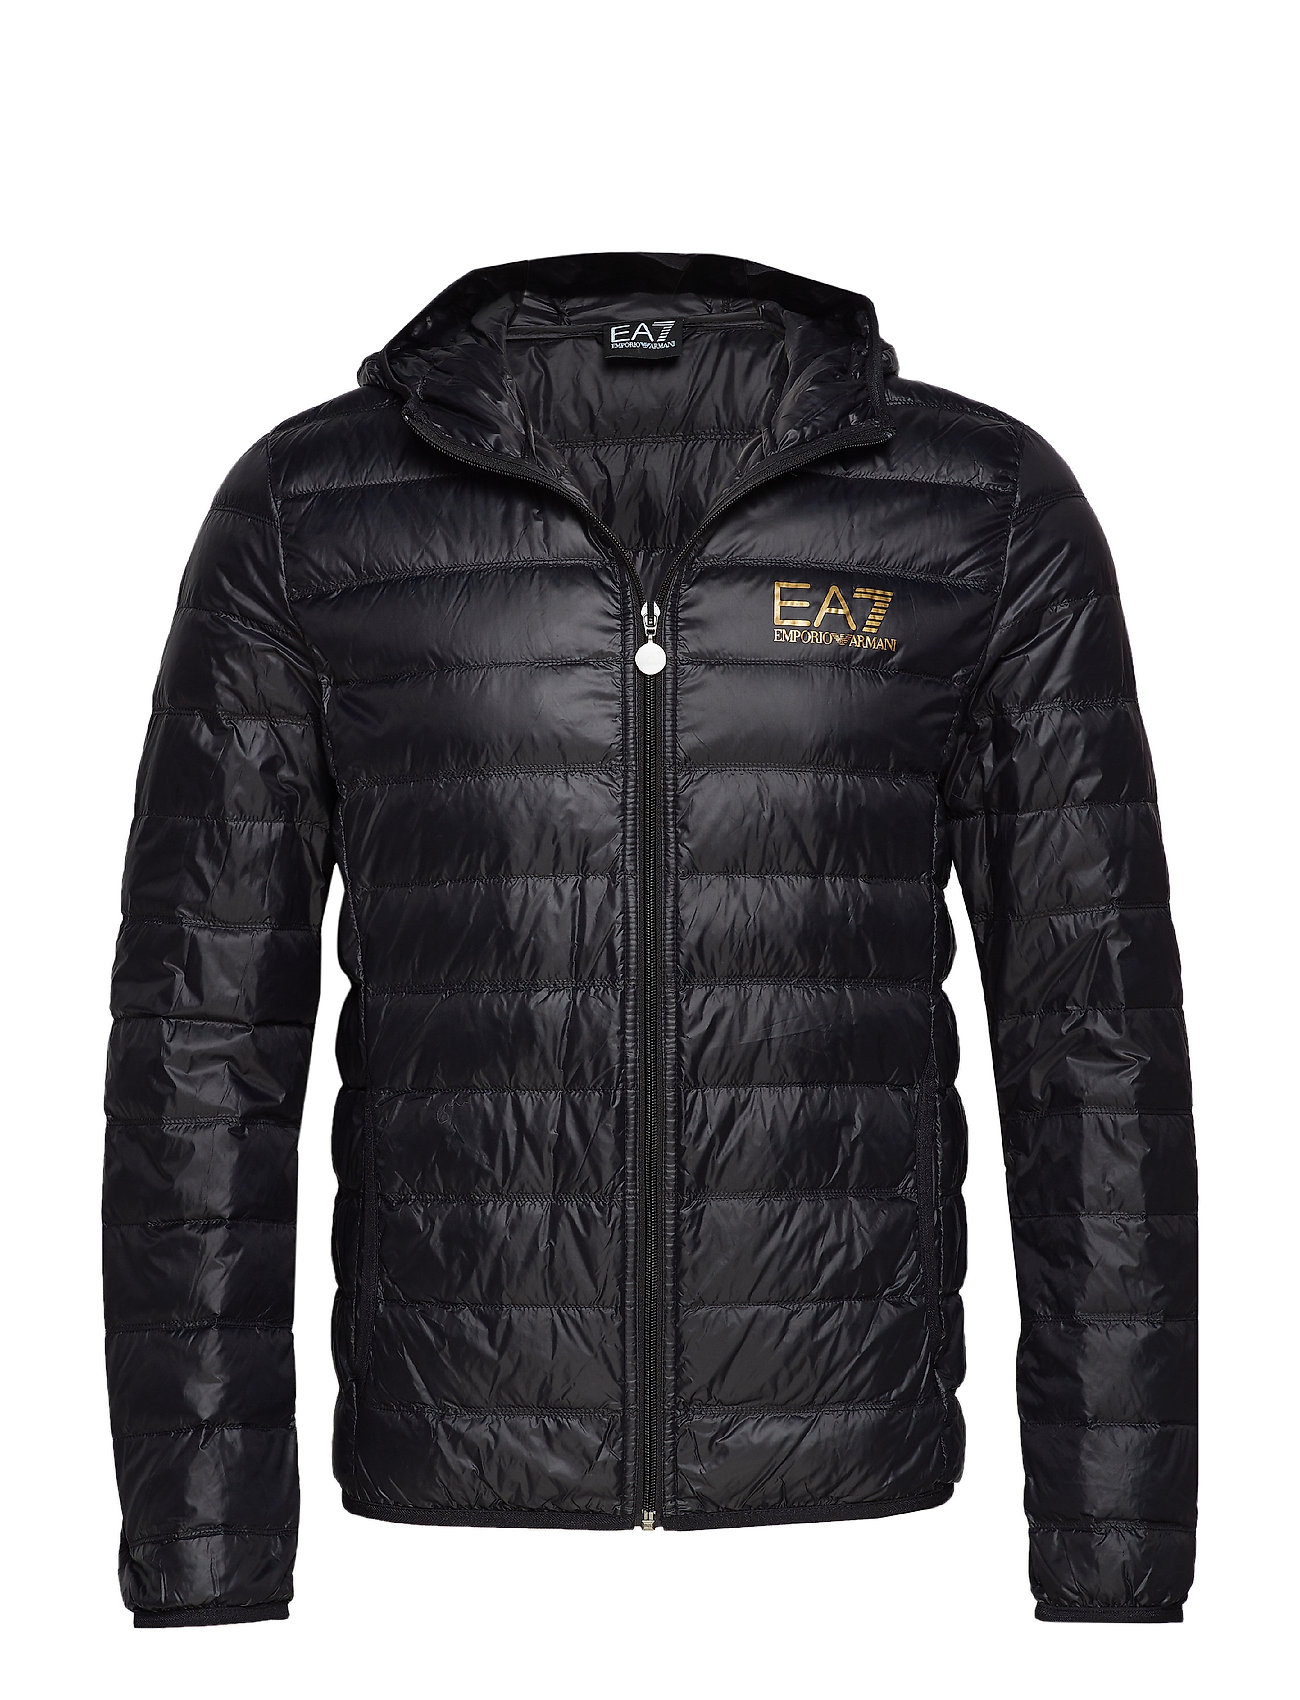 EA7 Down Jacket (Black/Svart) - 2299 kr | Boozt.com